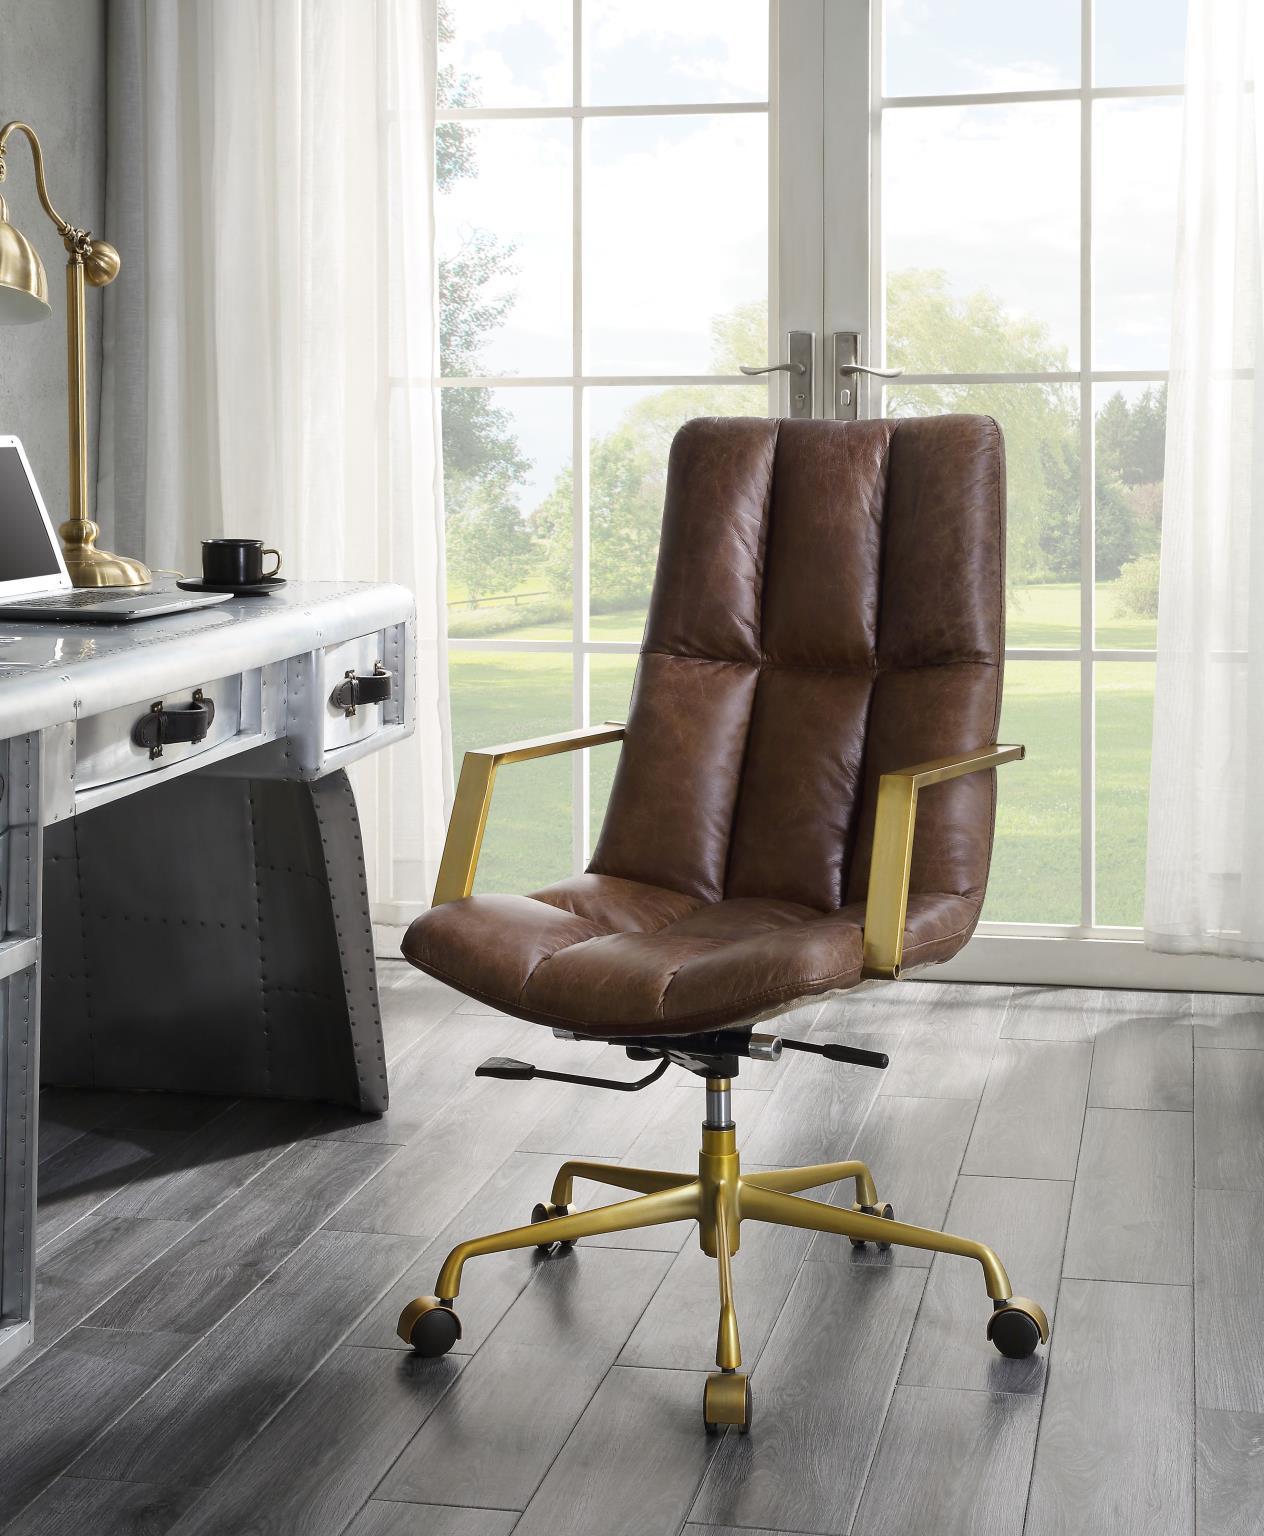 Contemporary, Transitional Executive Chair Rolento Rolento 92494 in Espresso Top grain leather